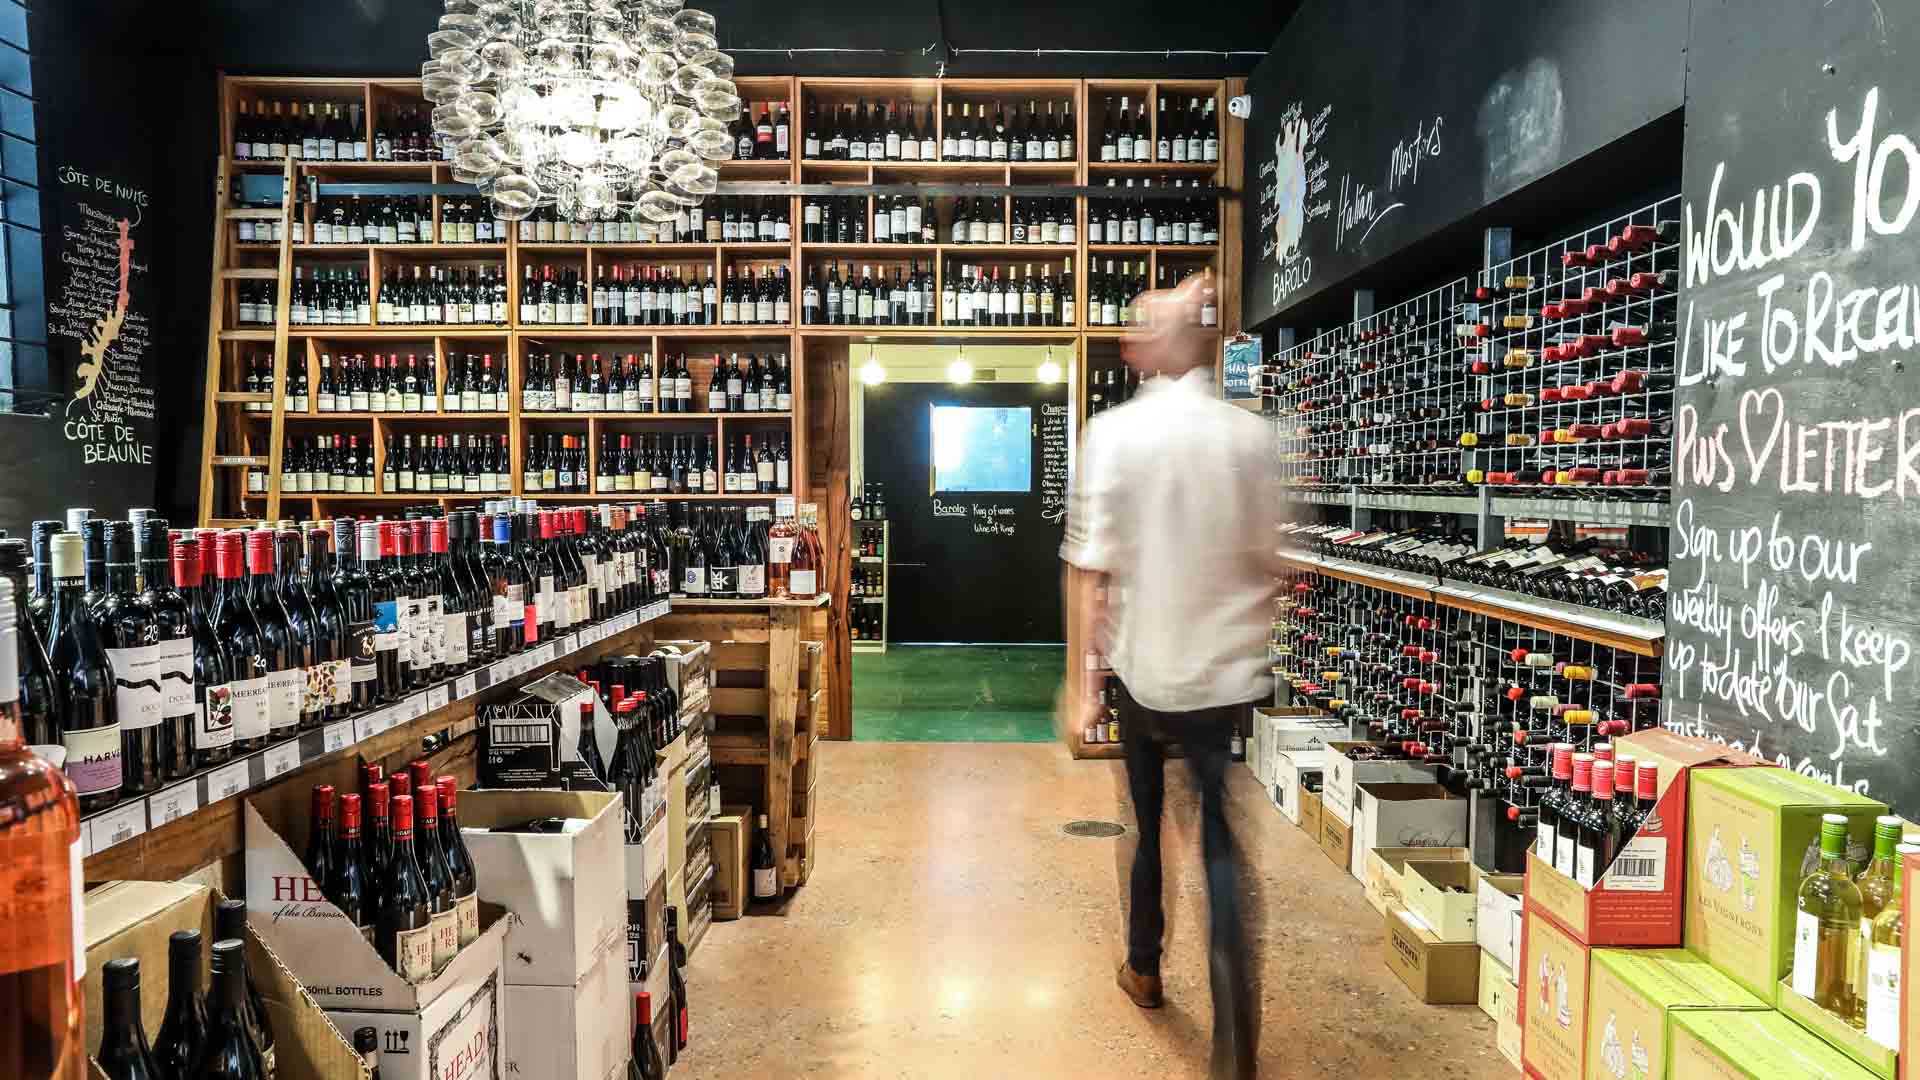 Prince Wine Store Sydney